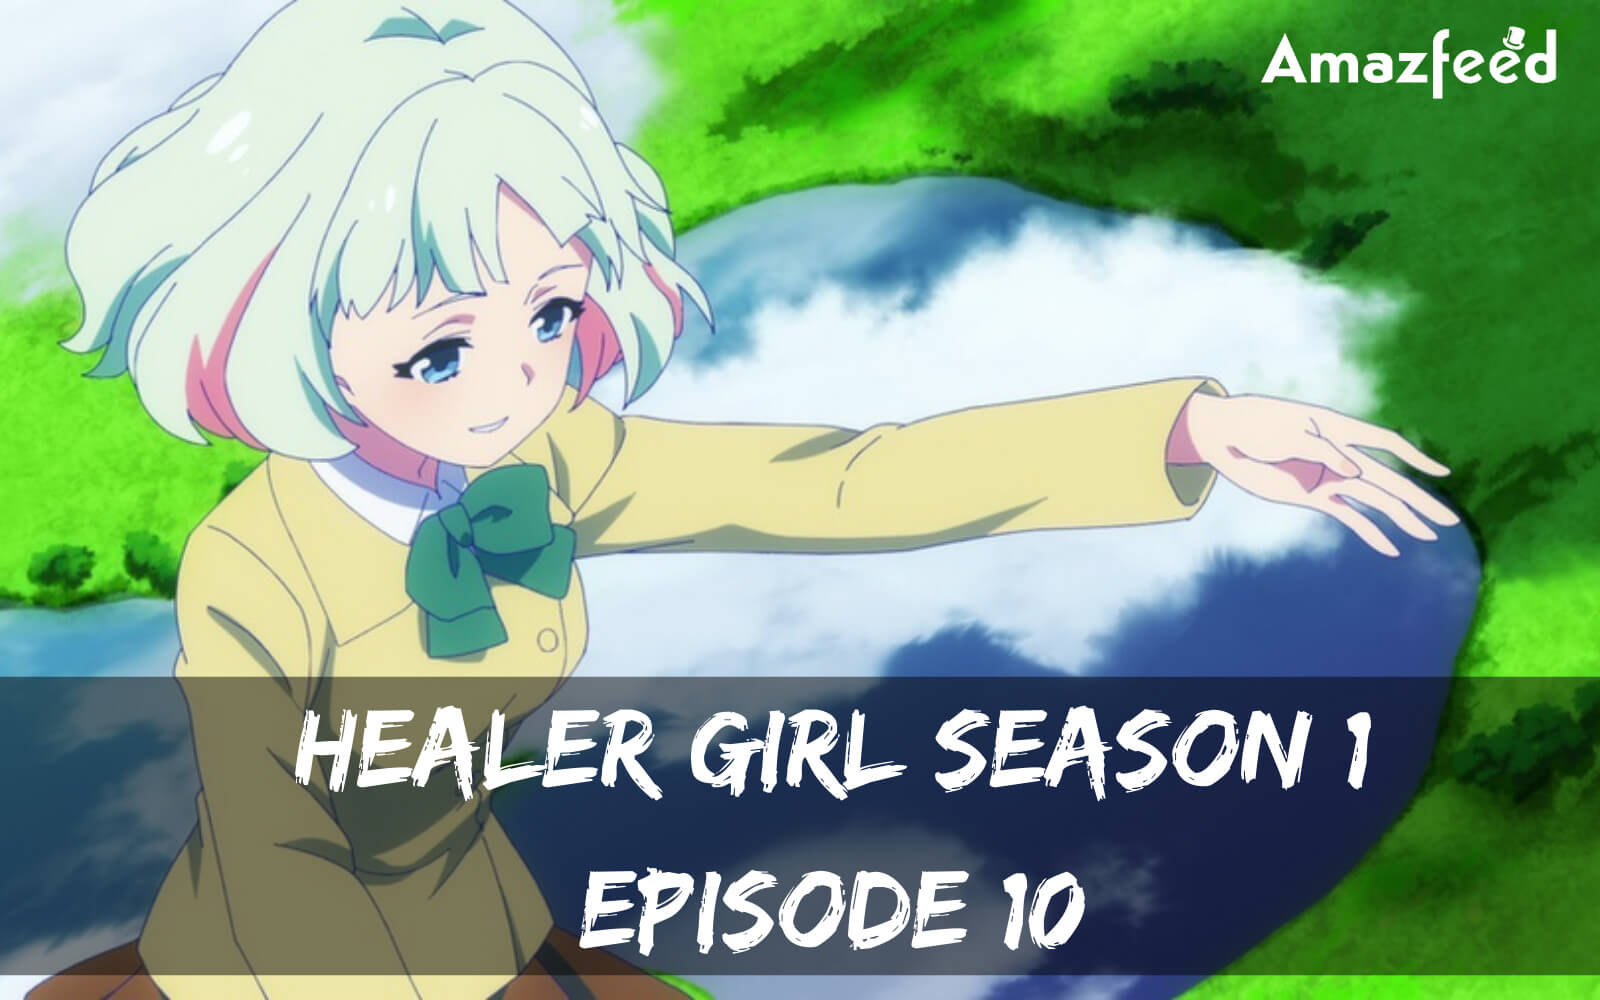 Healer Girl season 1 Episode 10 release date